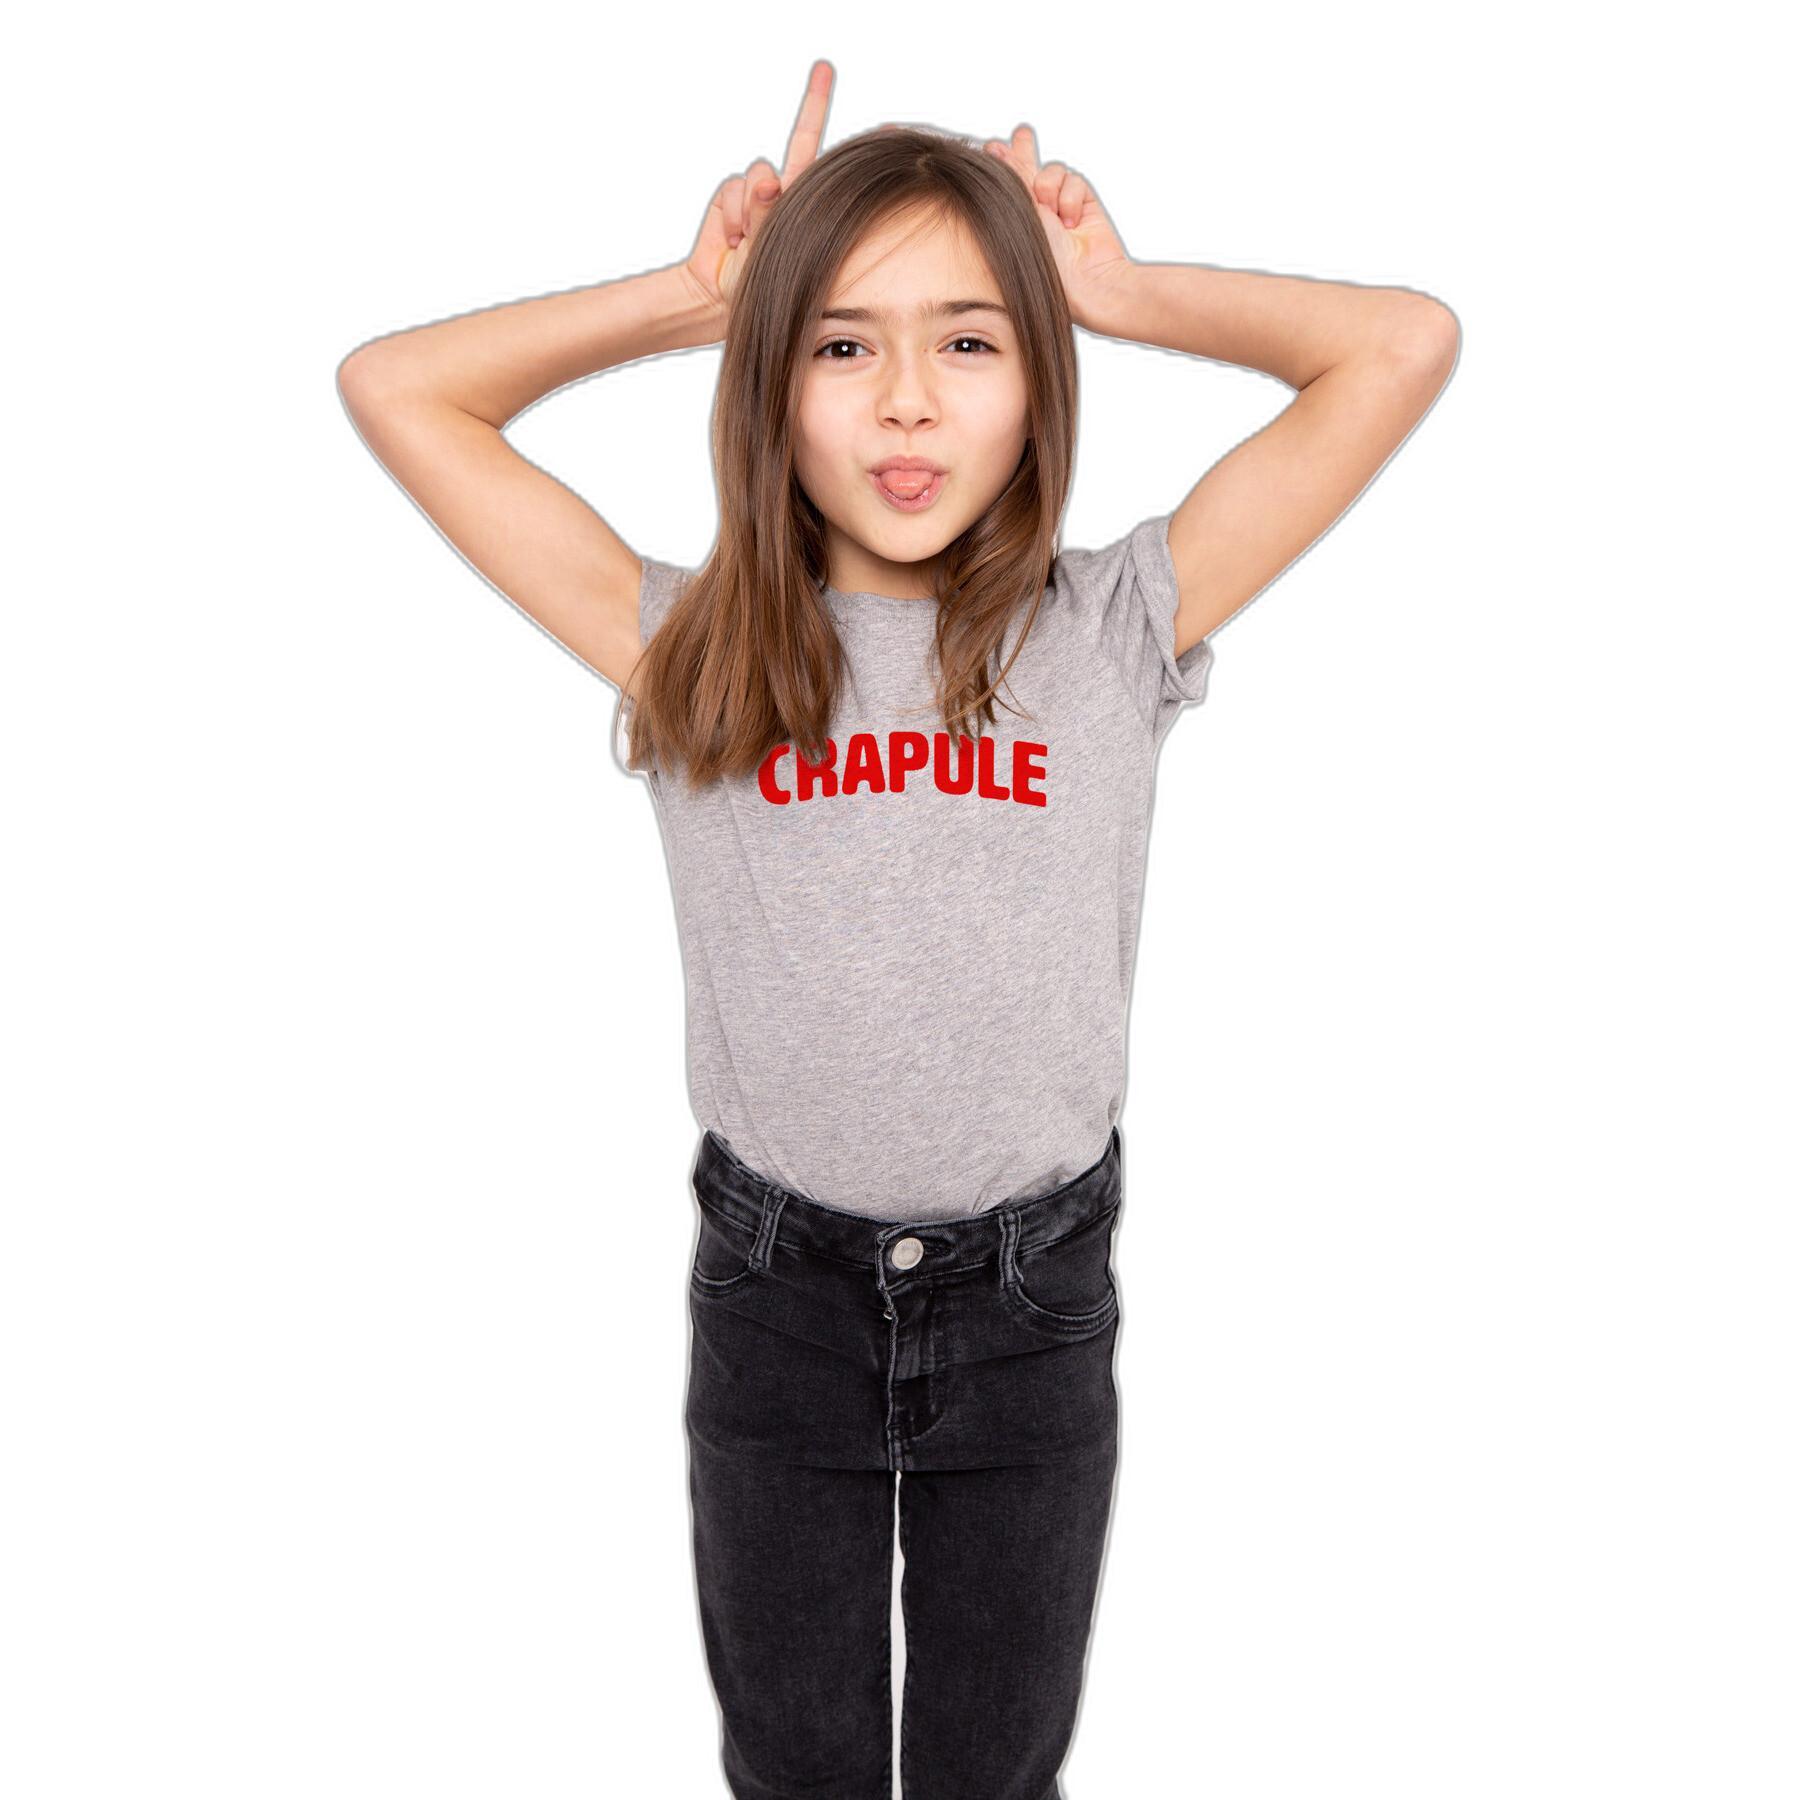 Child's T-shirt French Disorder Sacha Crapule